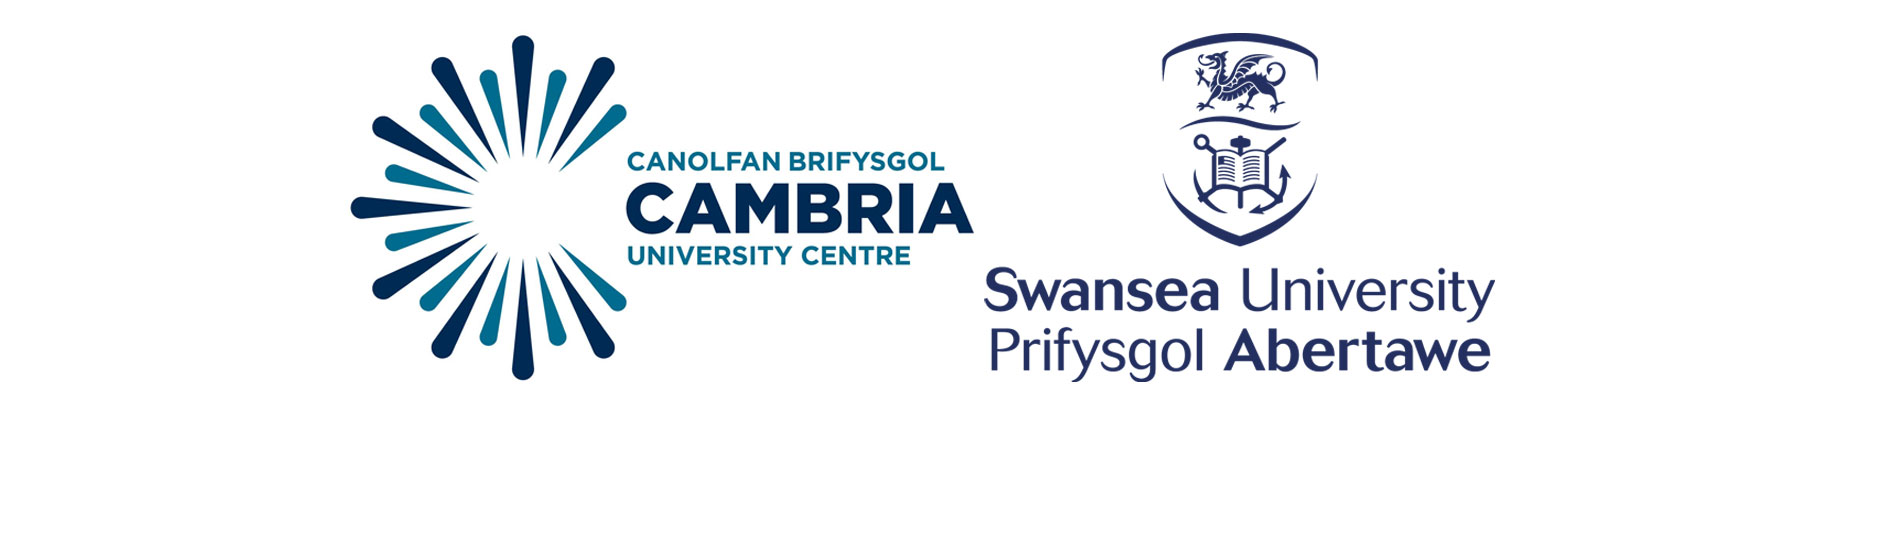 Swansea University and Cambria University Centre 